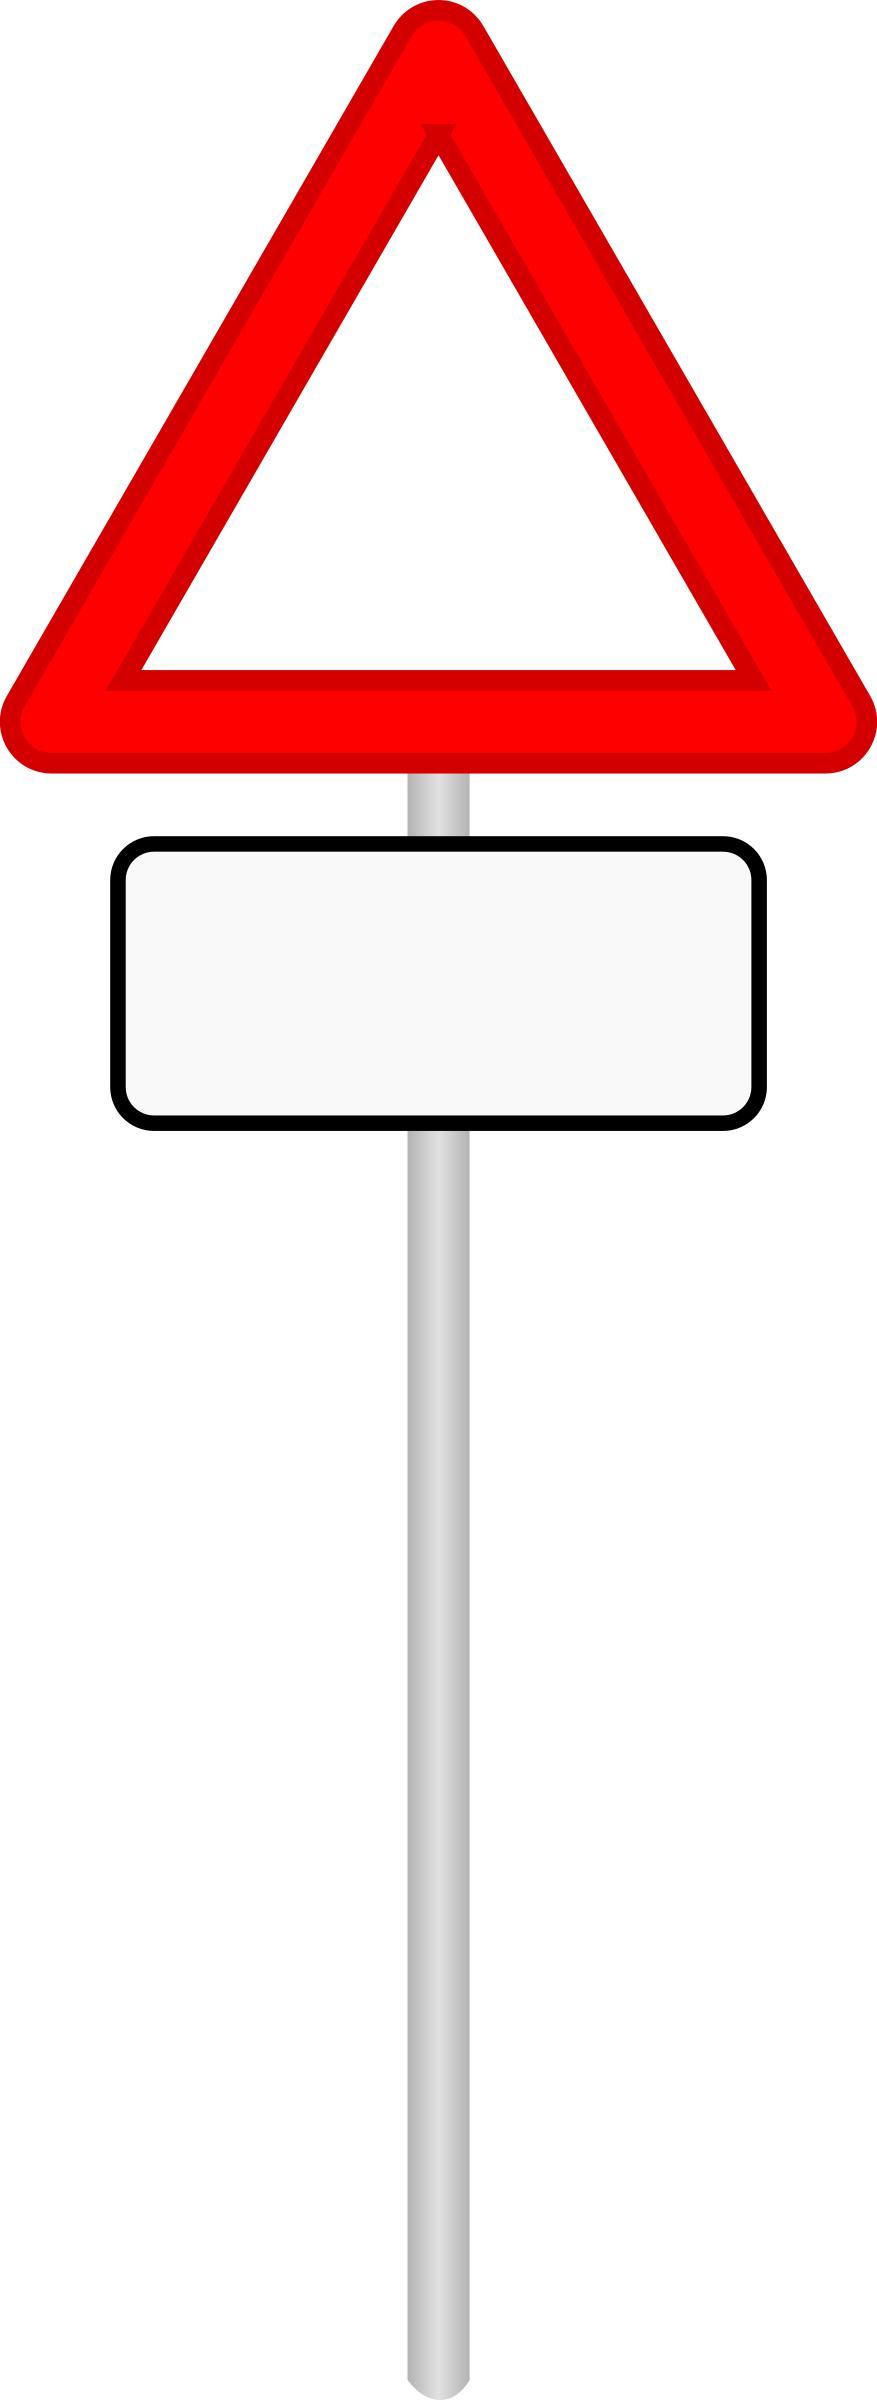 Road sign png transparent